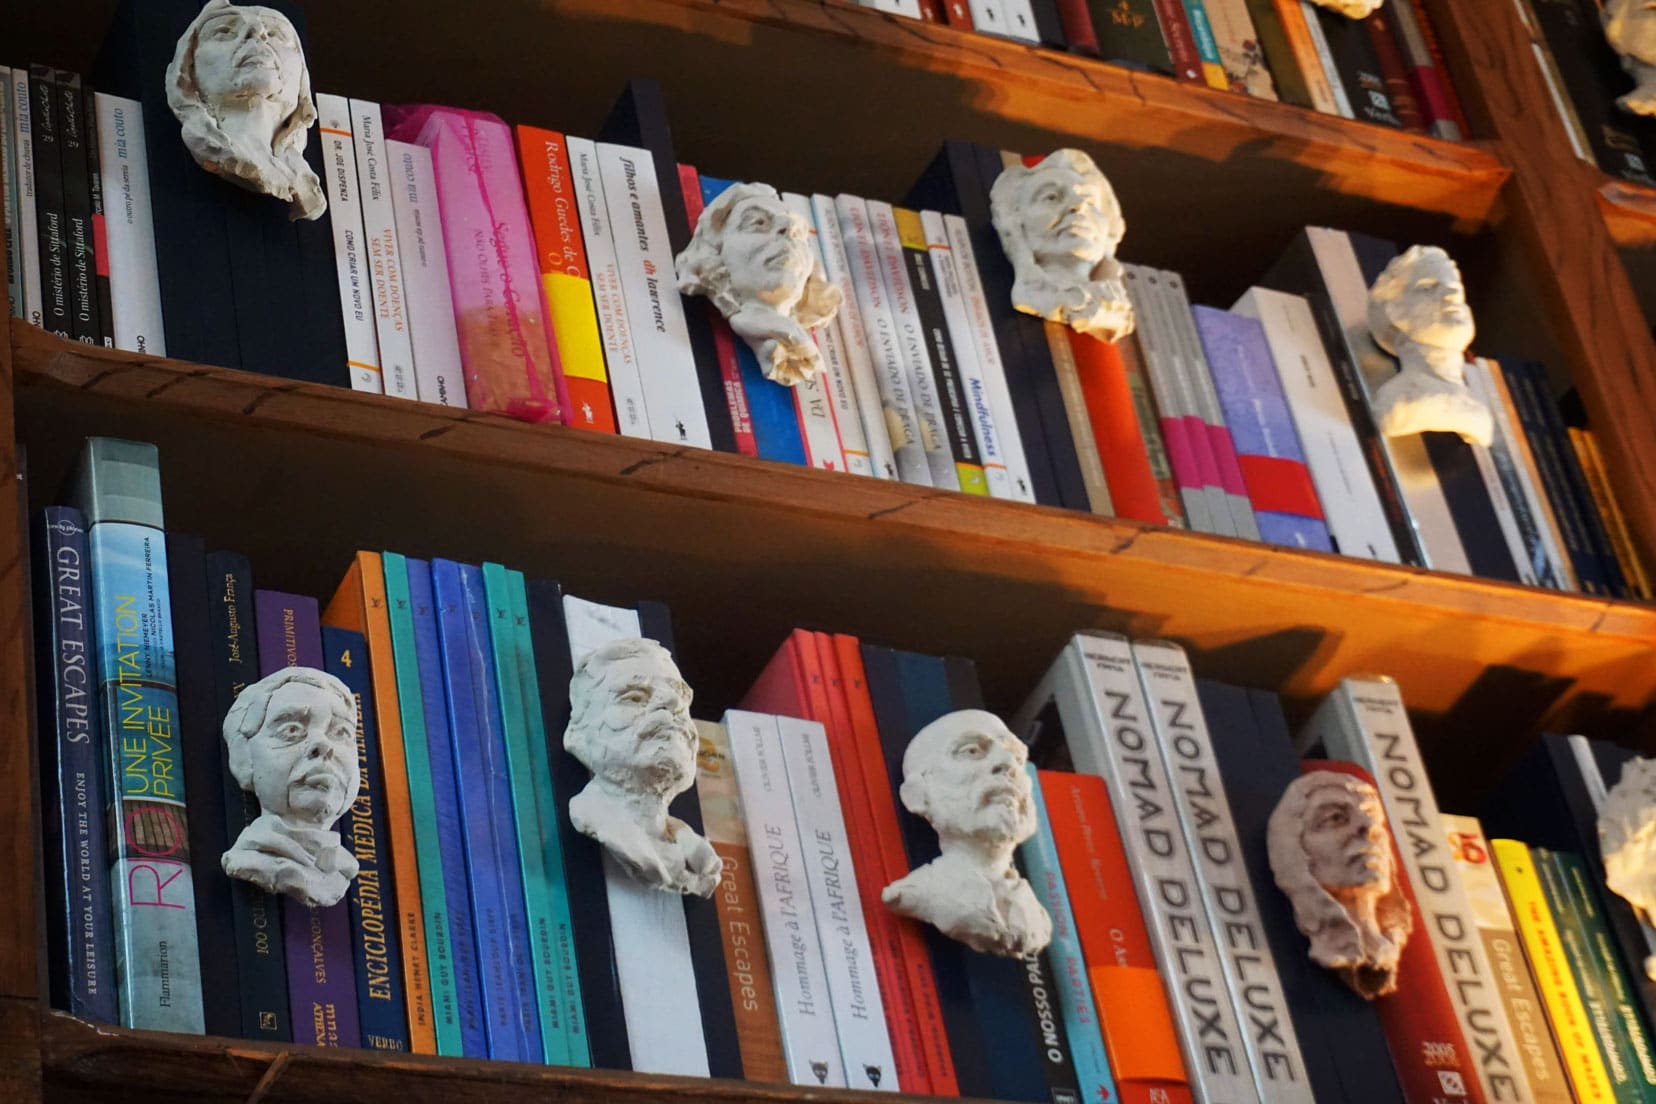 livraria Lello bookshop shelves with small white heads on the books